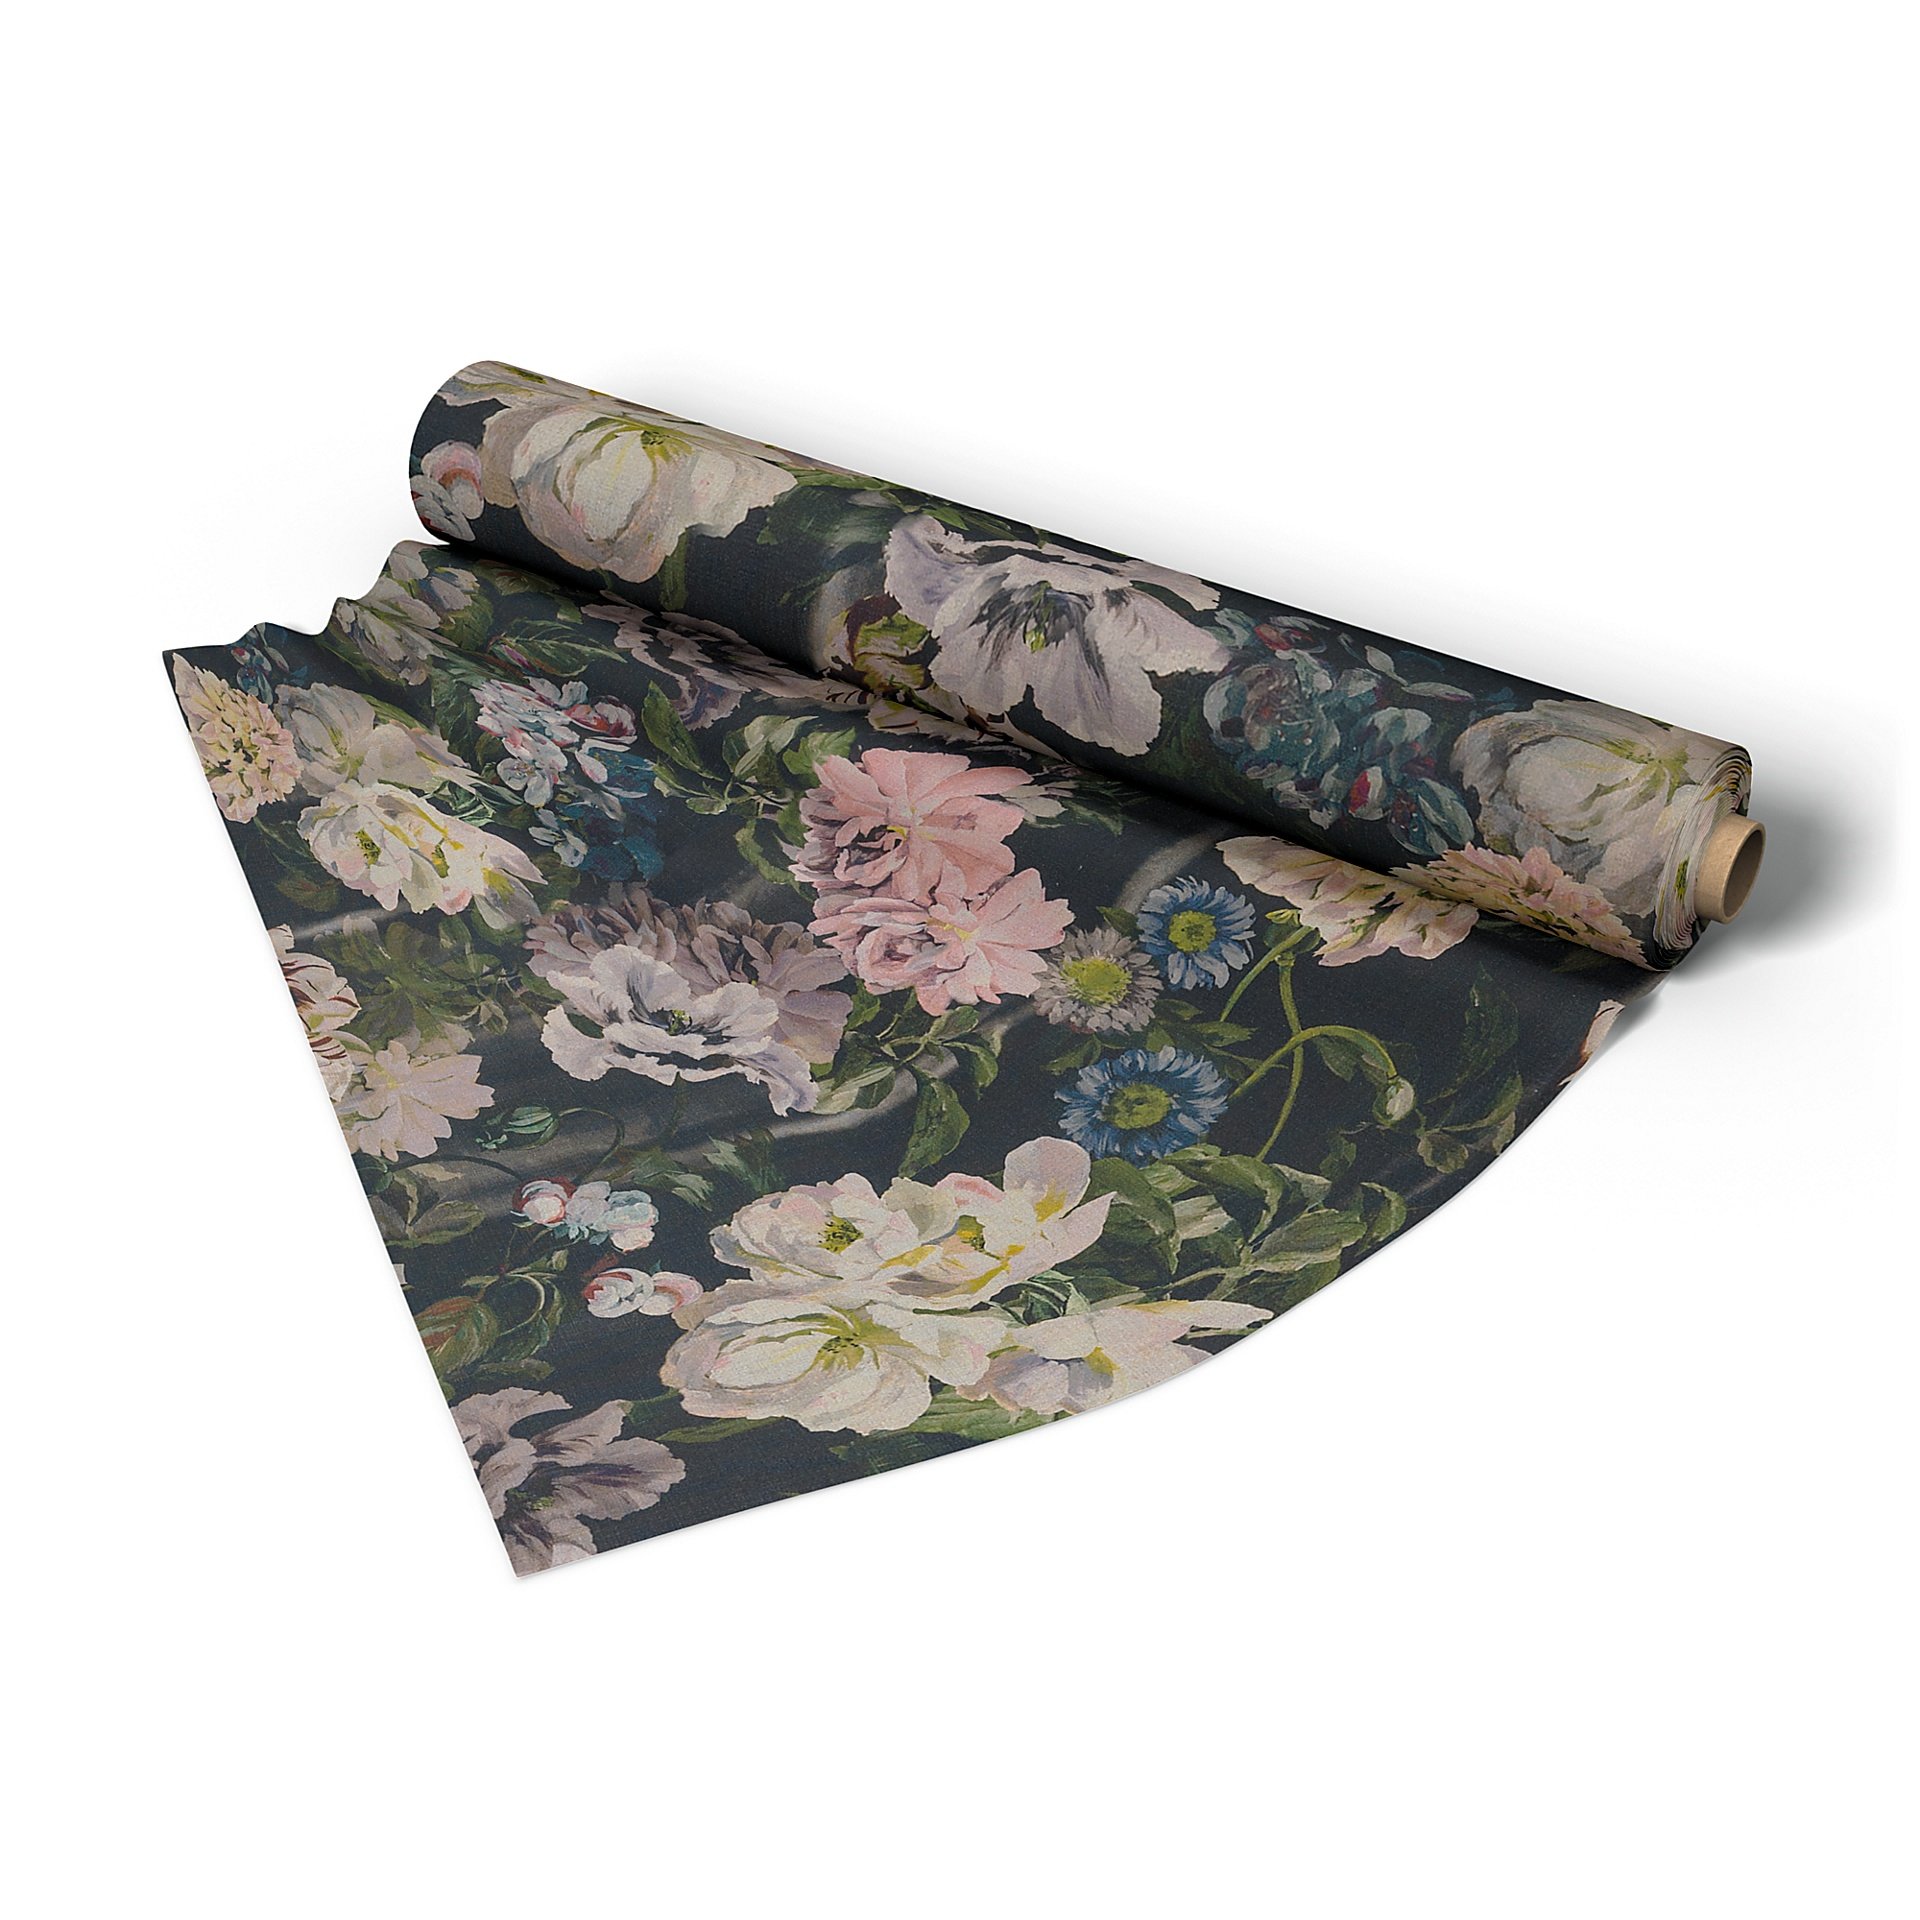 Fabric per metre, Delft Flower - Graphite, Linen - Bemz